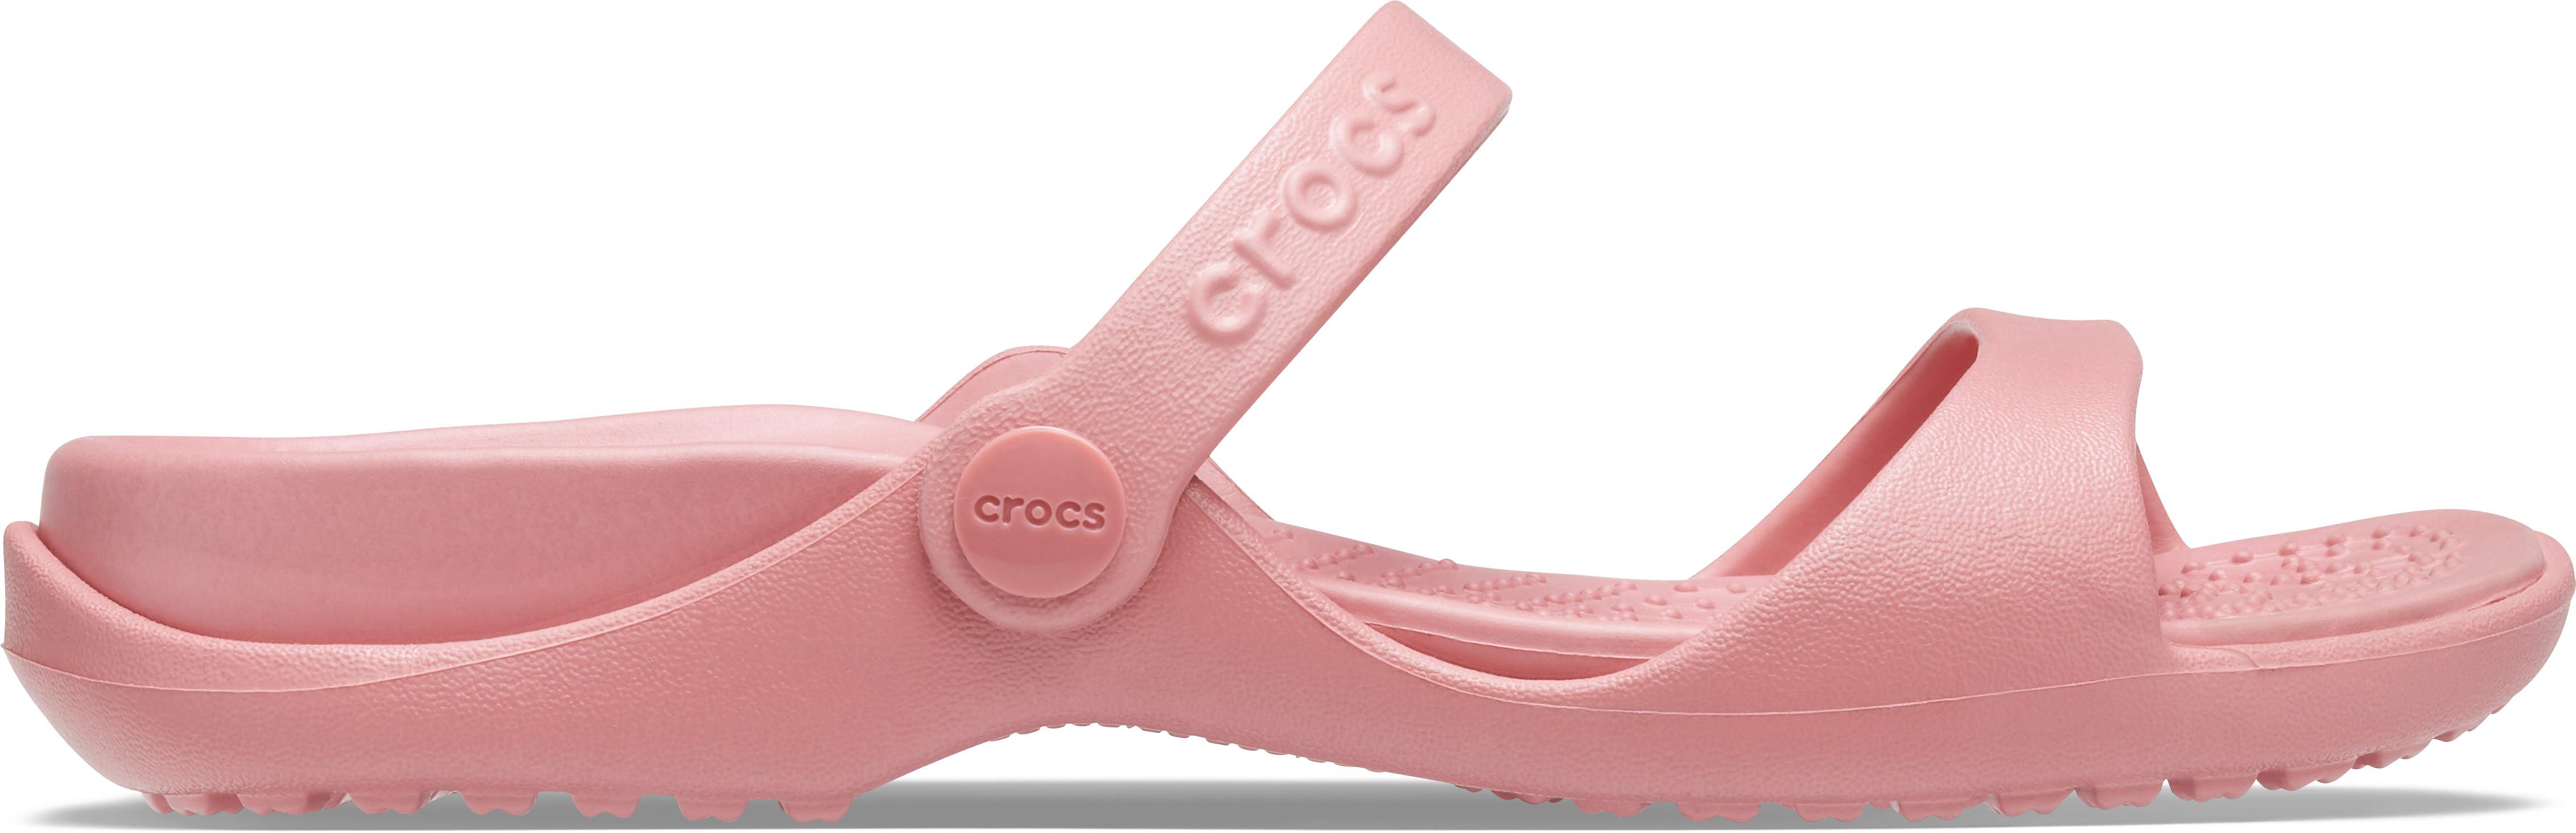 crocs cleo 2